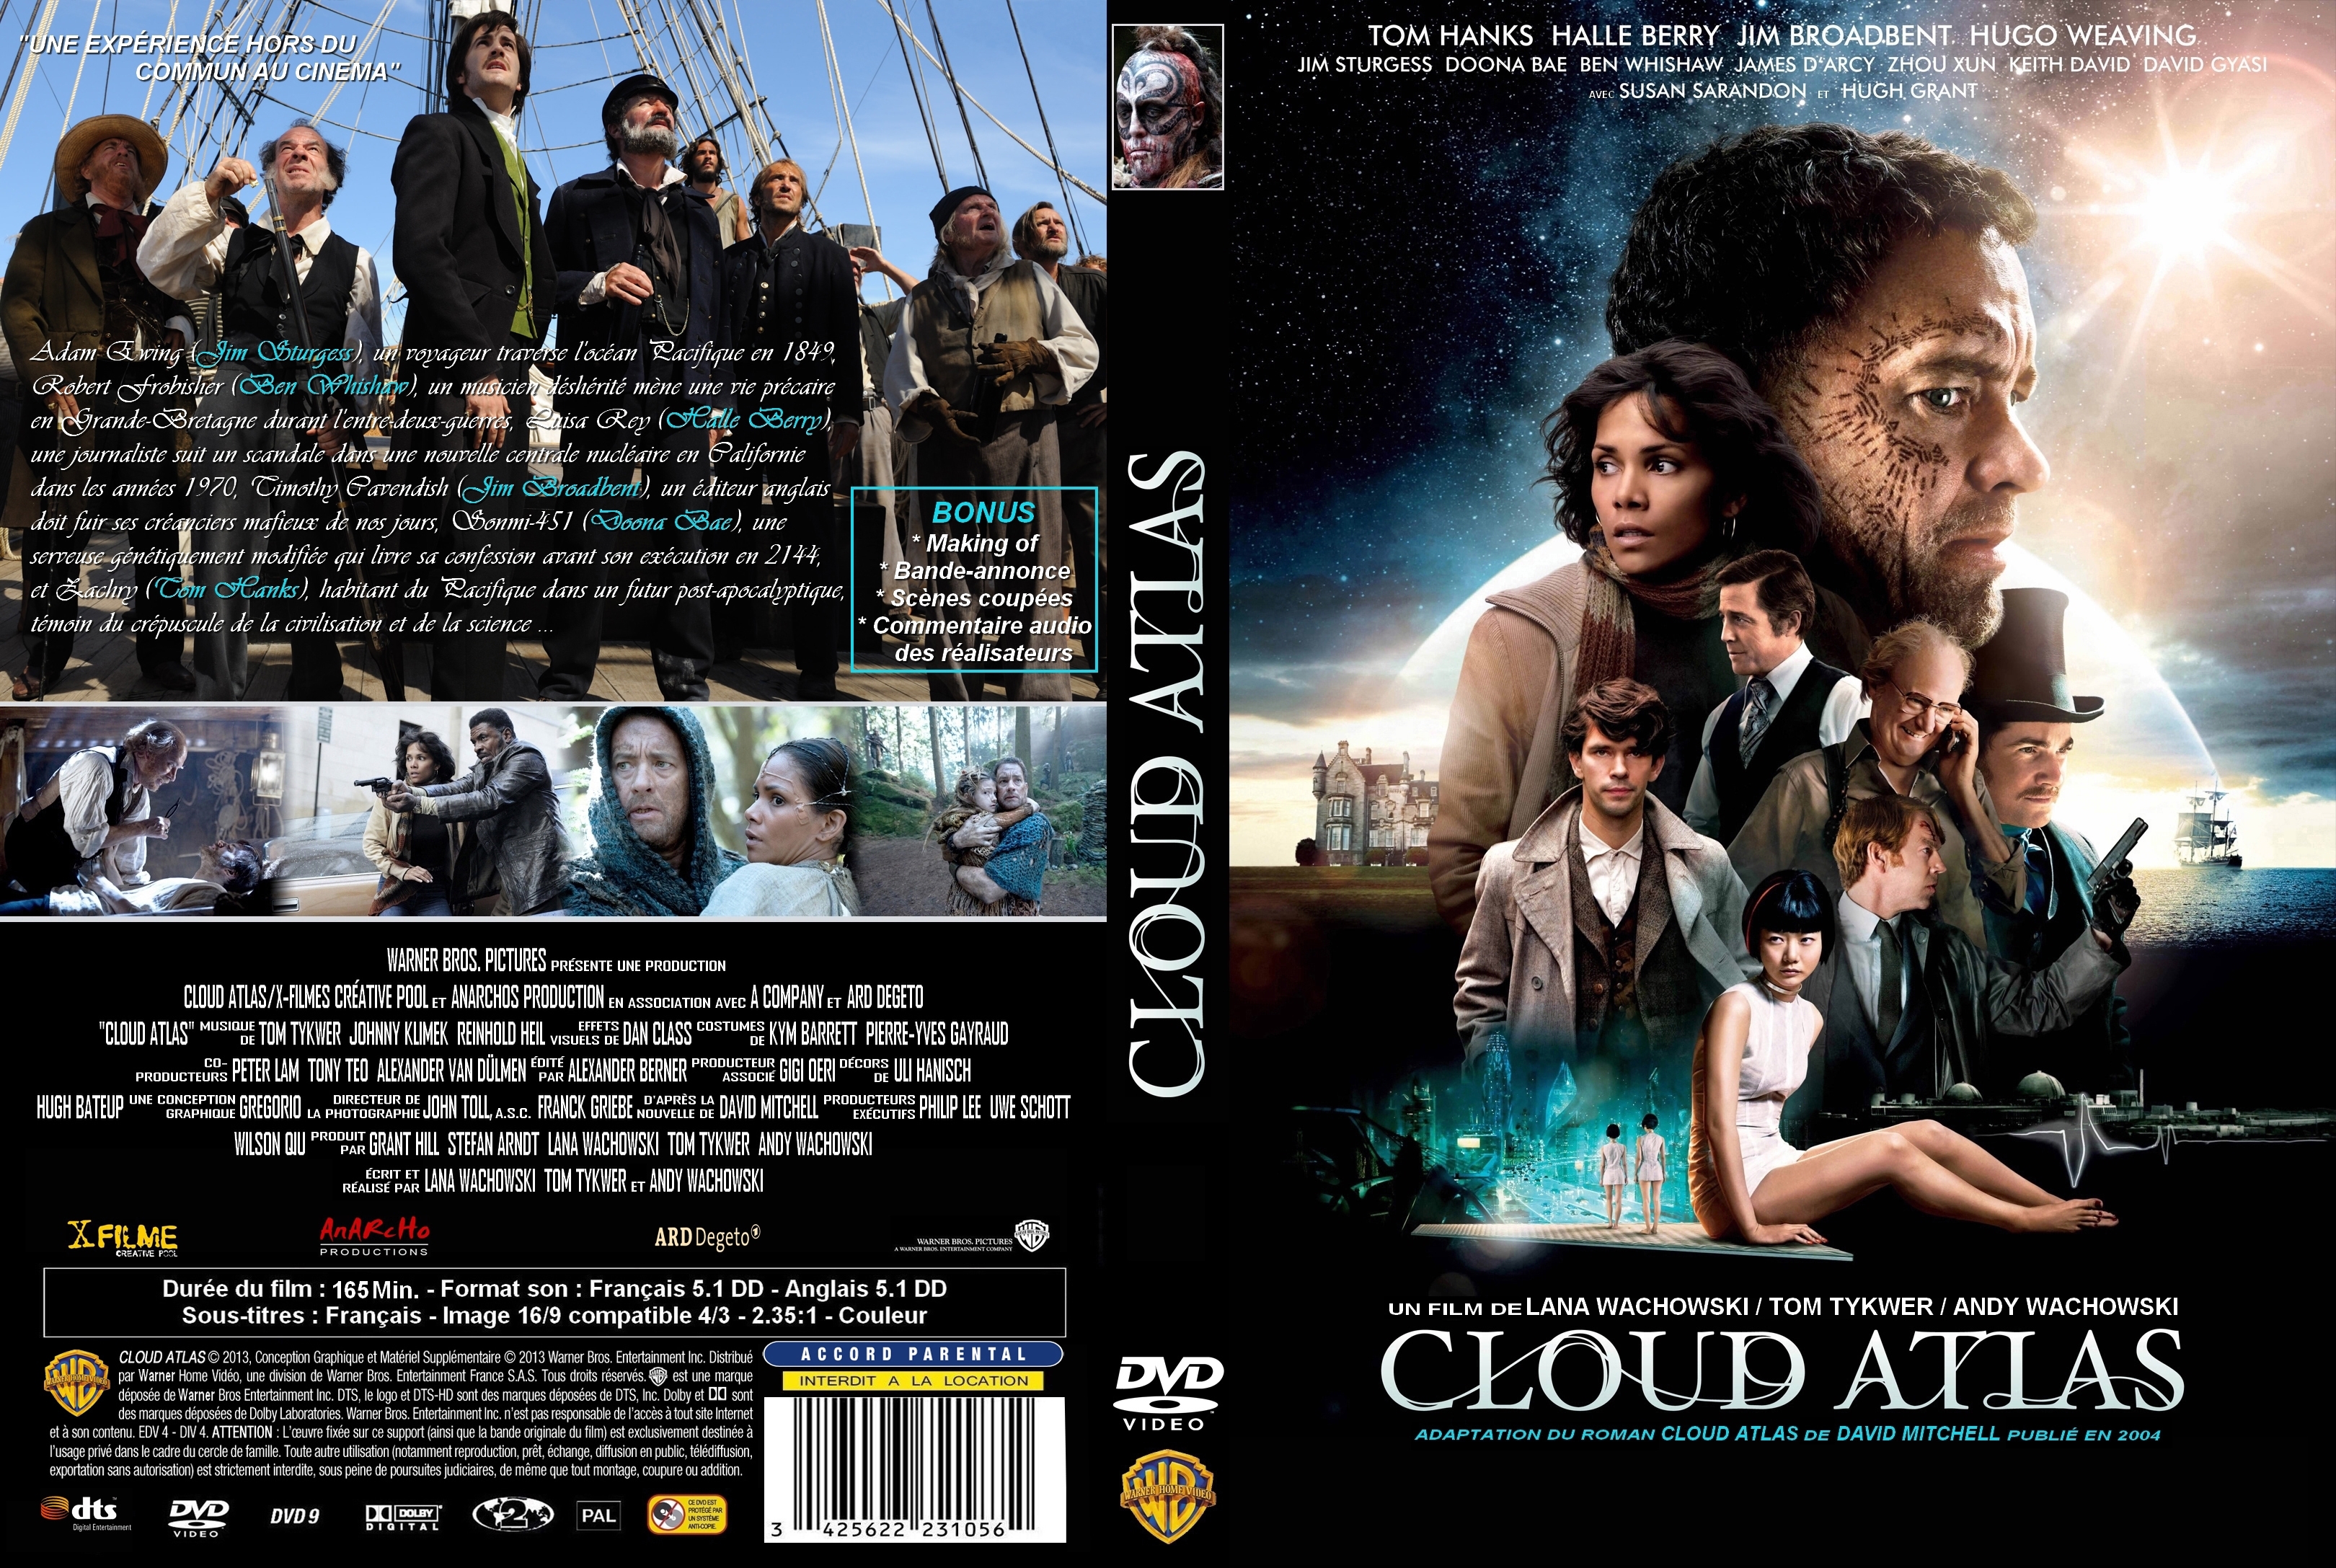 Jaquette DVD Cloud atlas custom v2